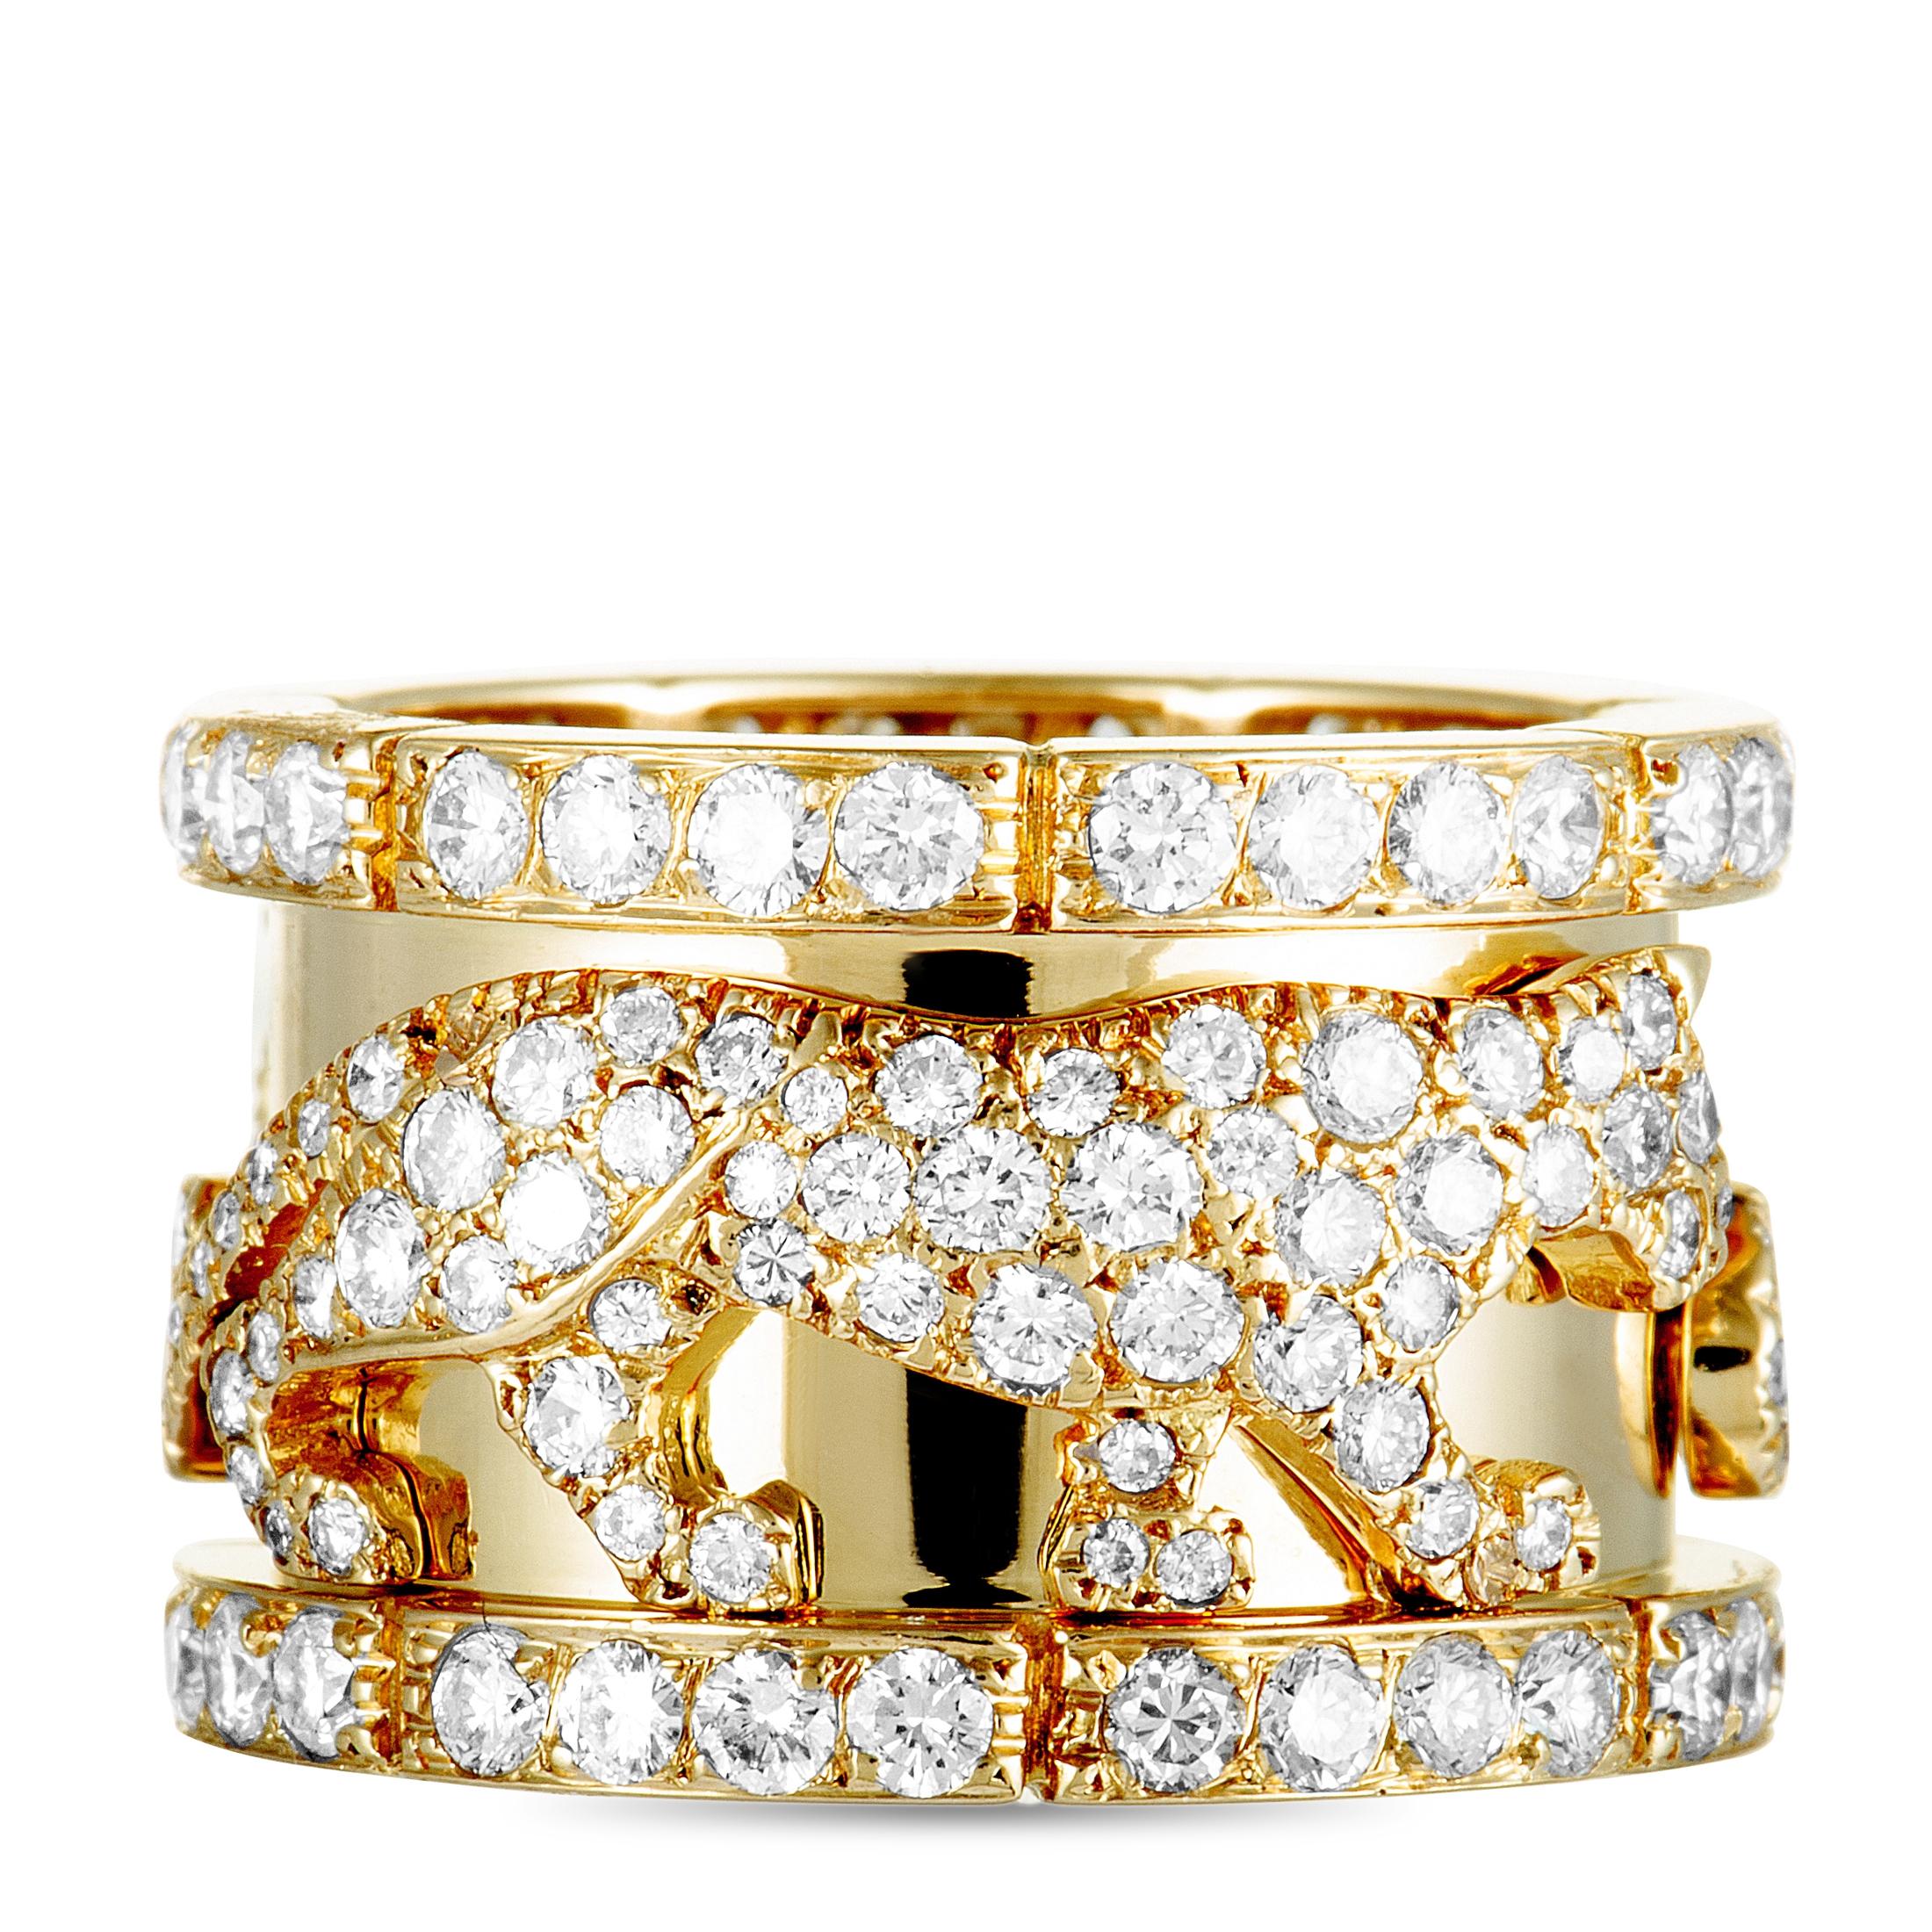 Cartier Panthère 18 Karat Yellow Gold Diamond Band Ring 1